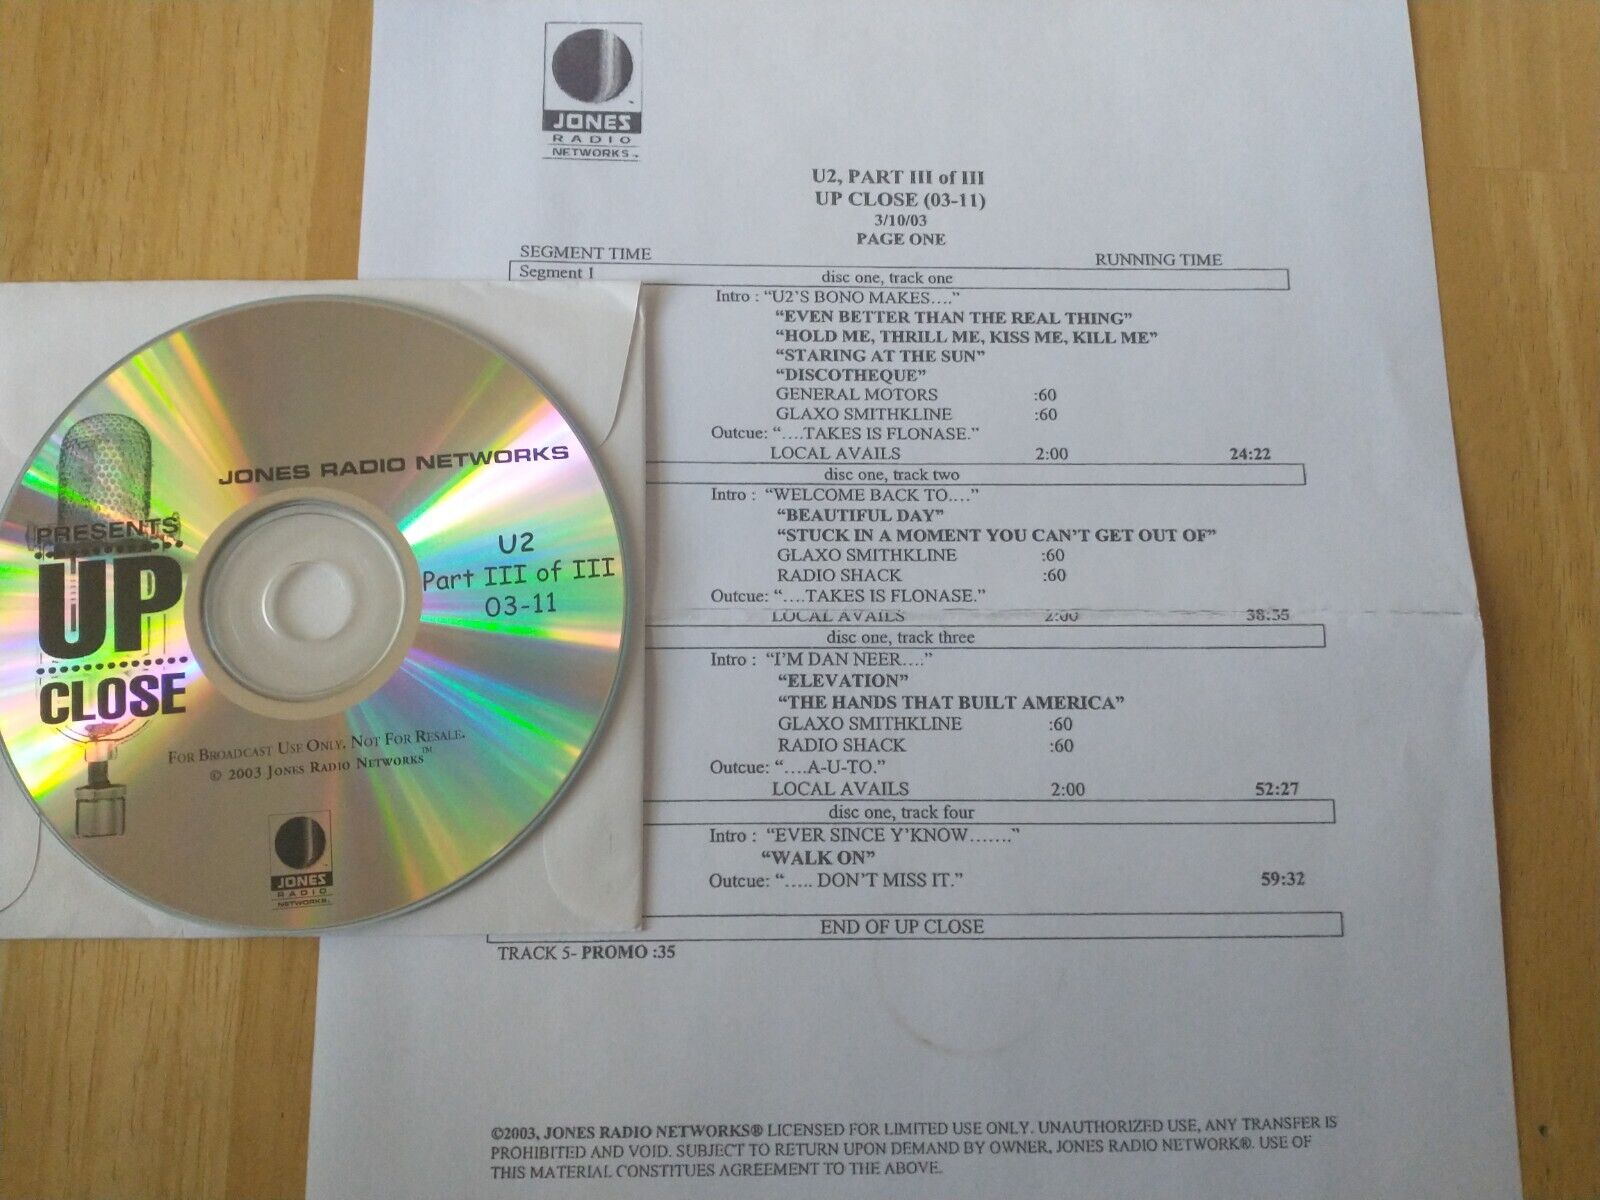 U2 Up Close 1 cd music & interview radio show 3/10/03 #03-11